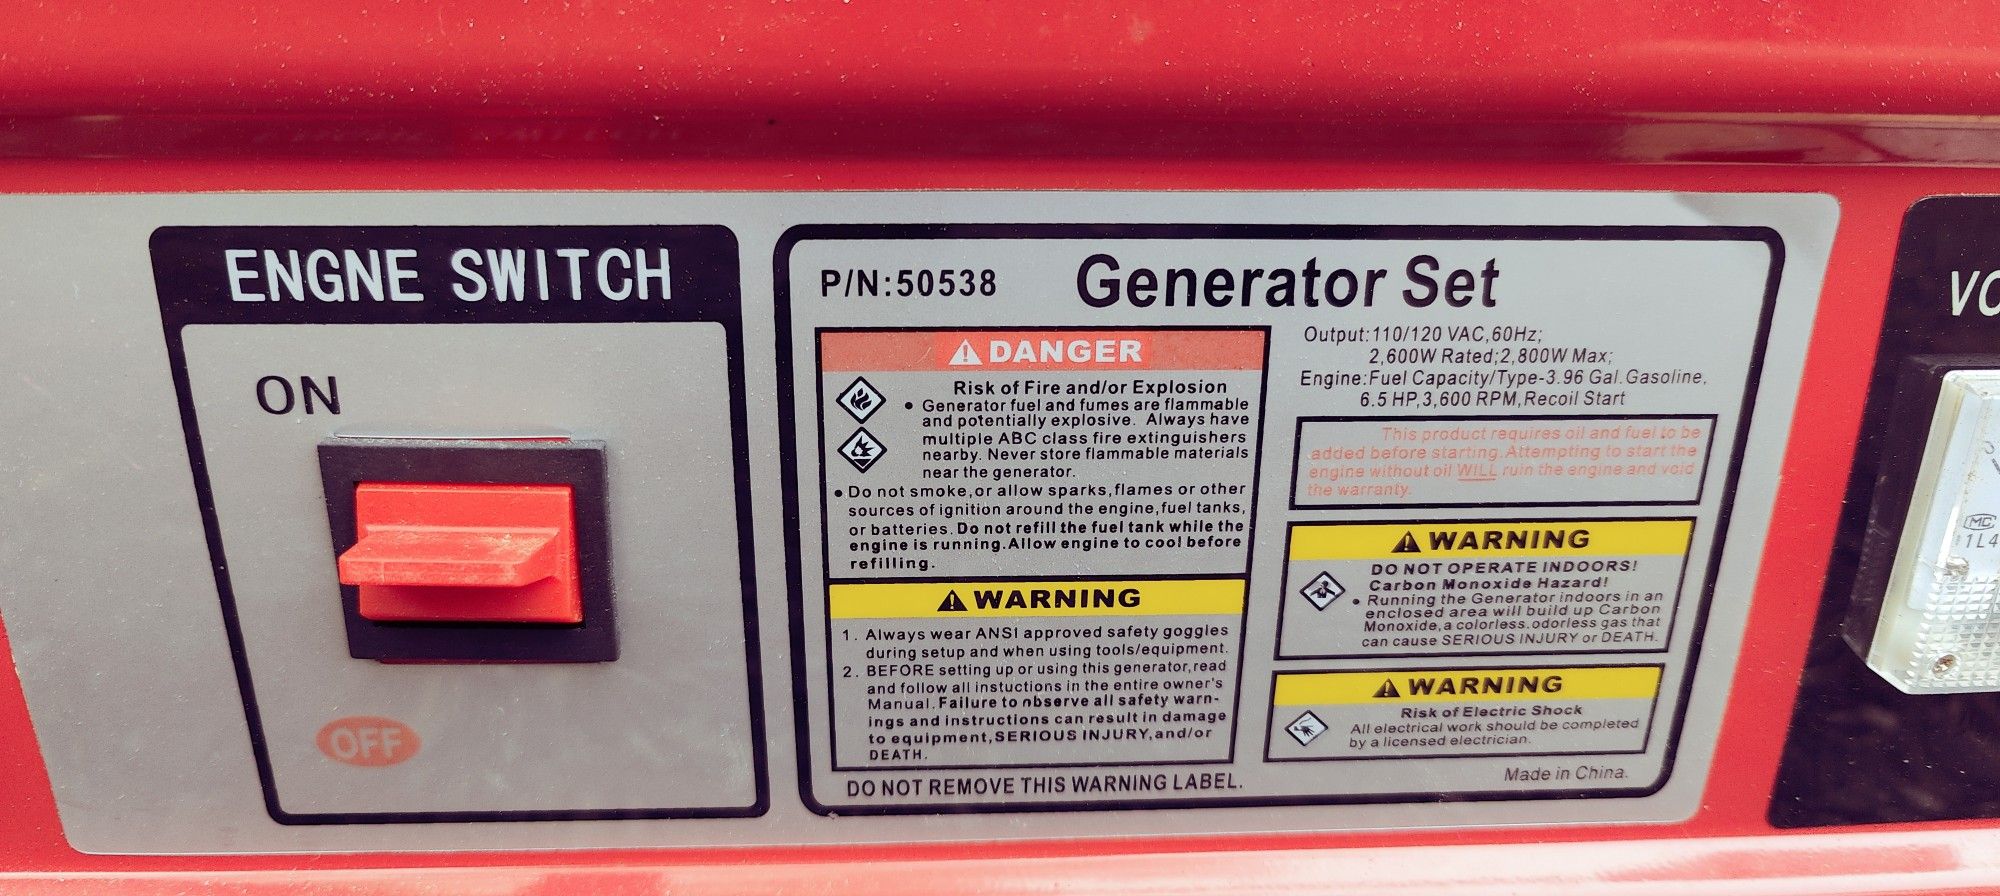 2800 Generator